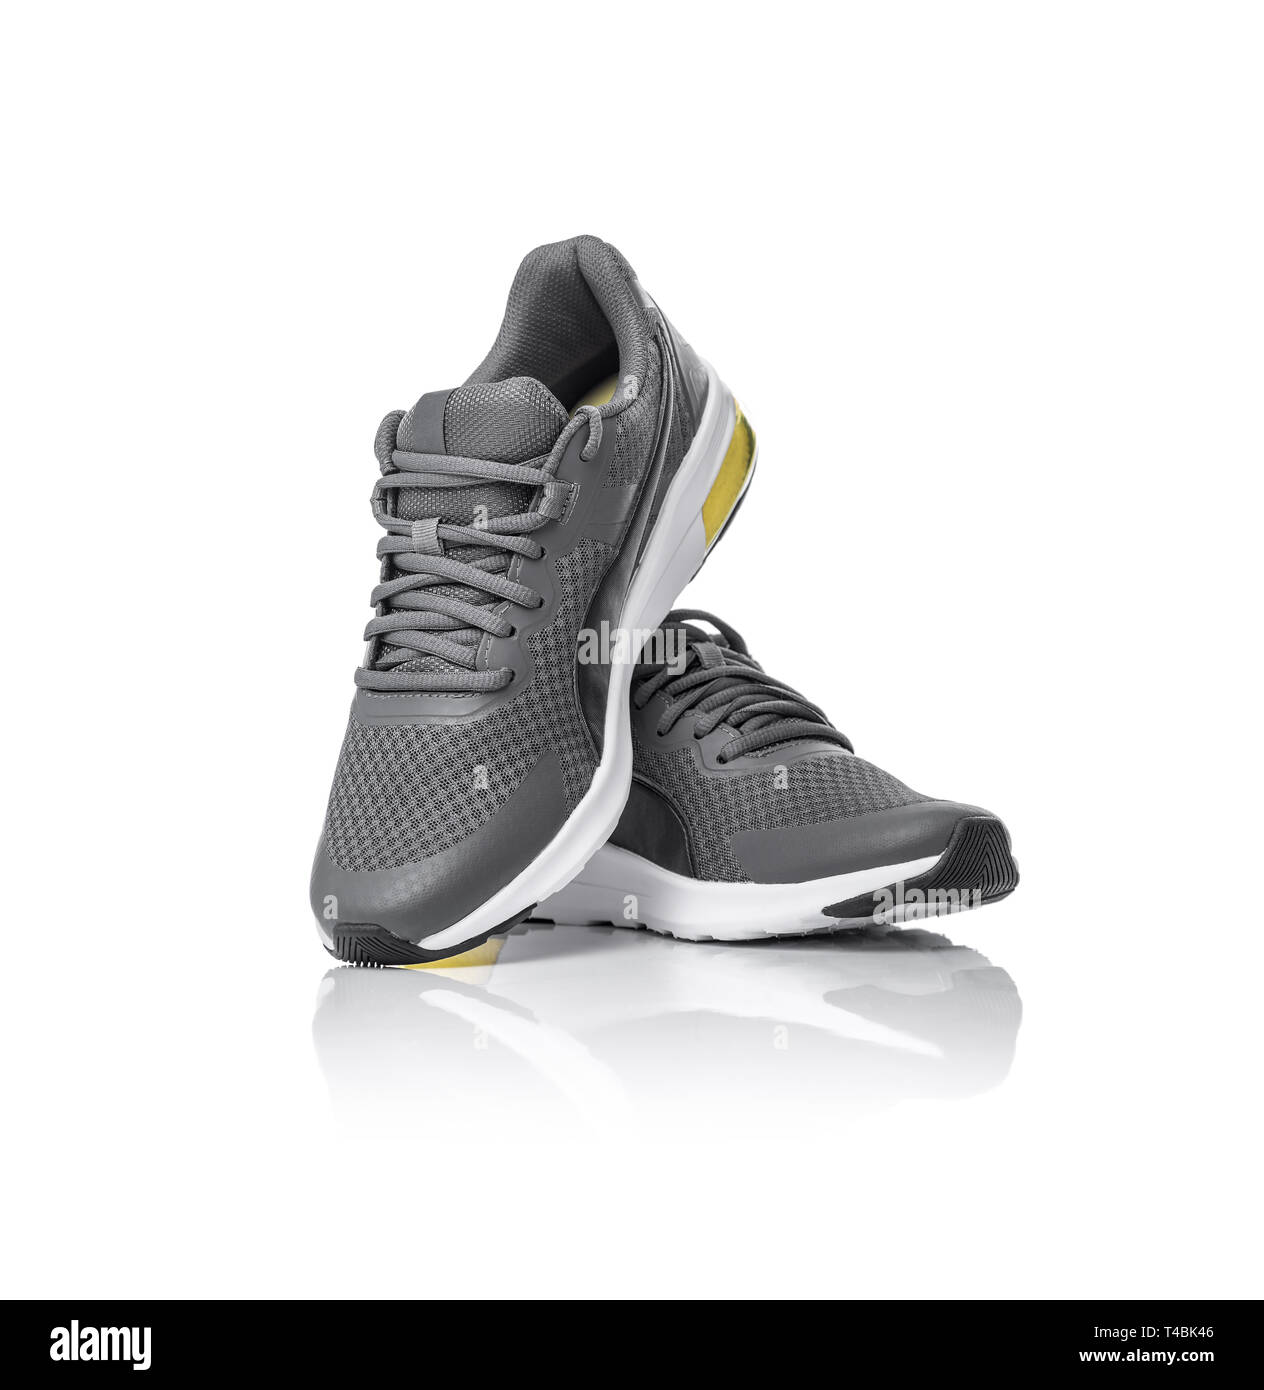 Unbranded black sport running shoes or 